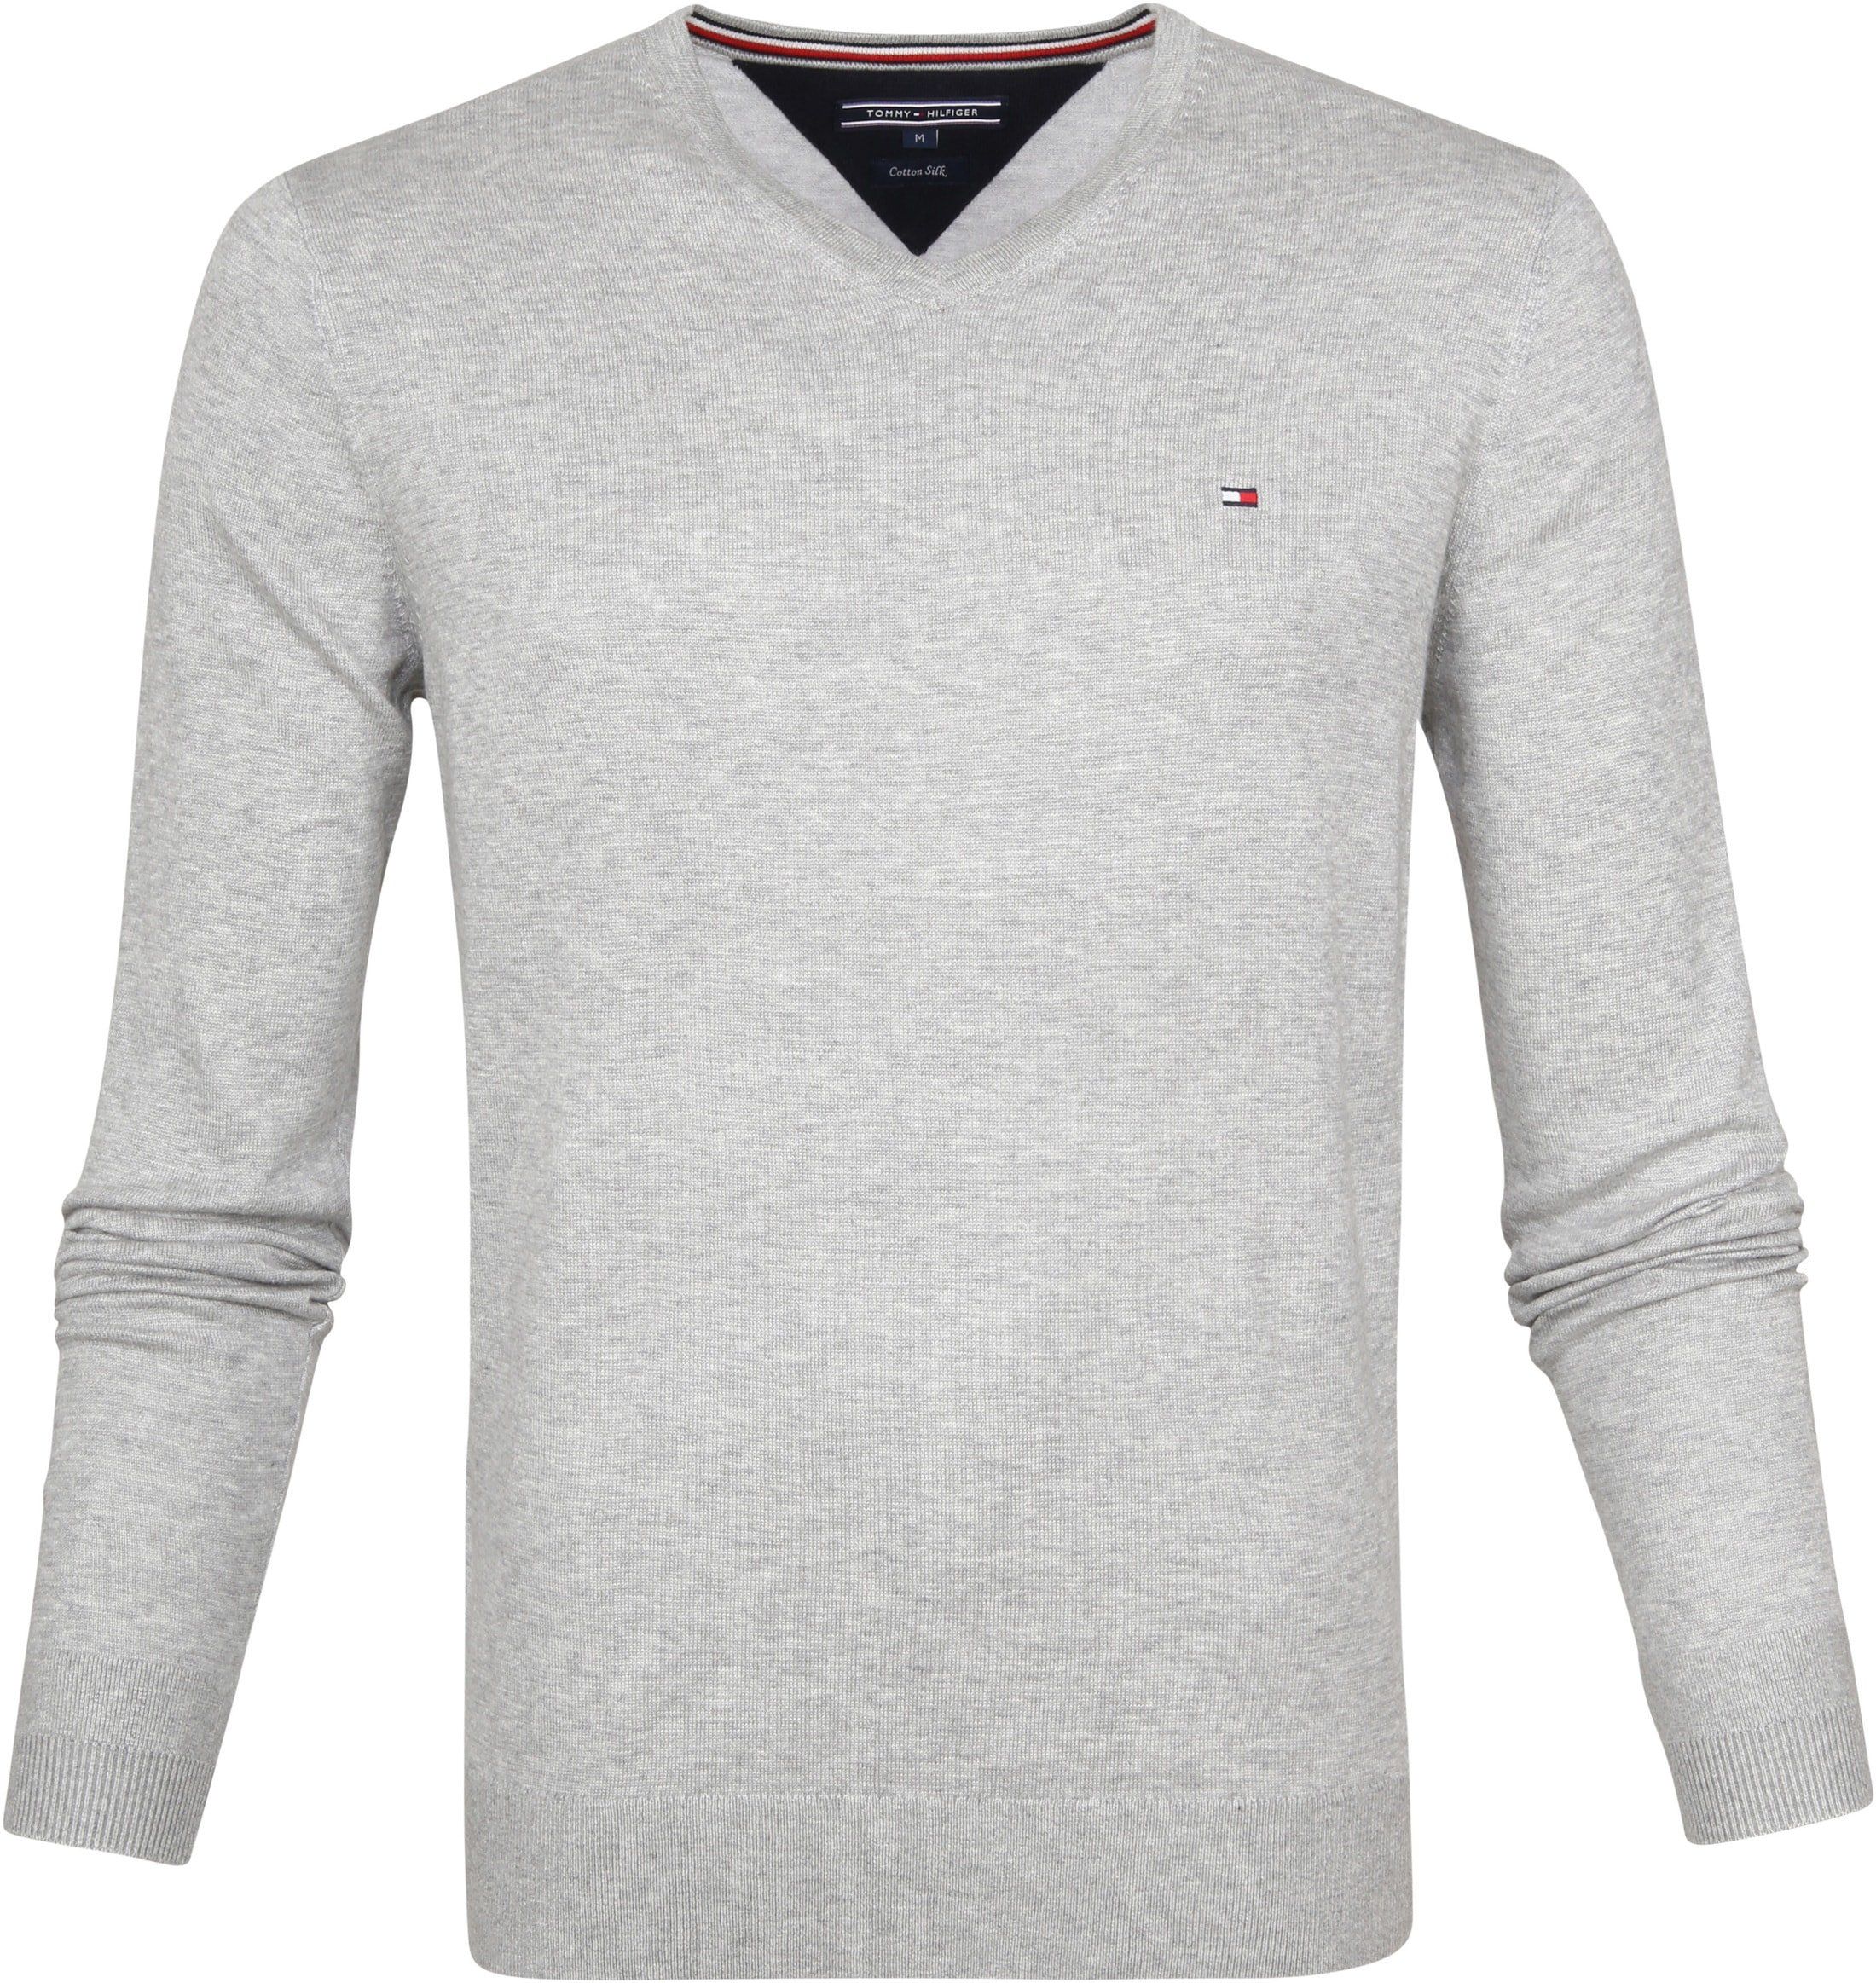 Tommy Hilfiger Pullover V-Neck Light Grey size S